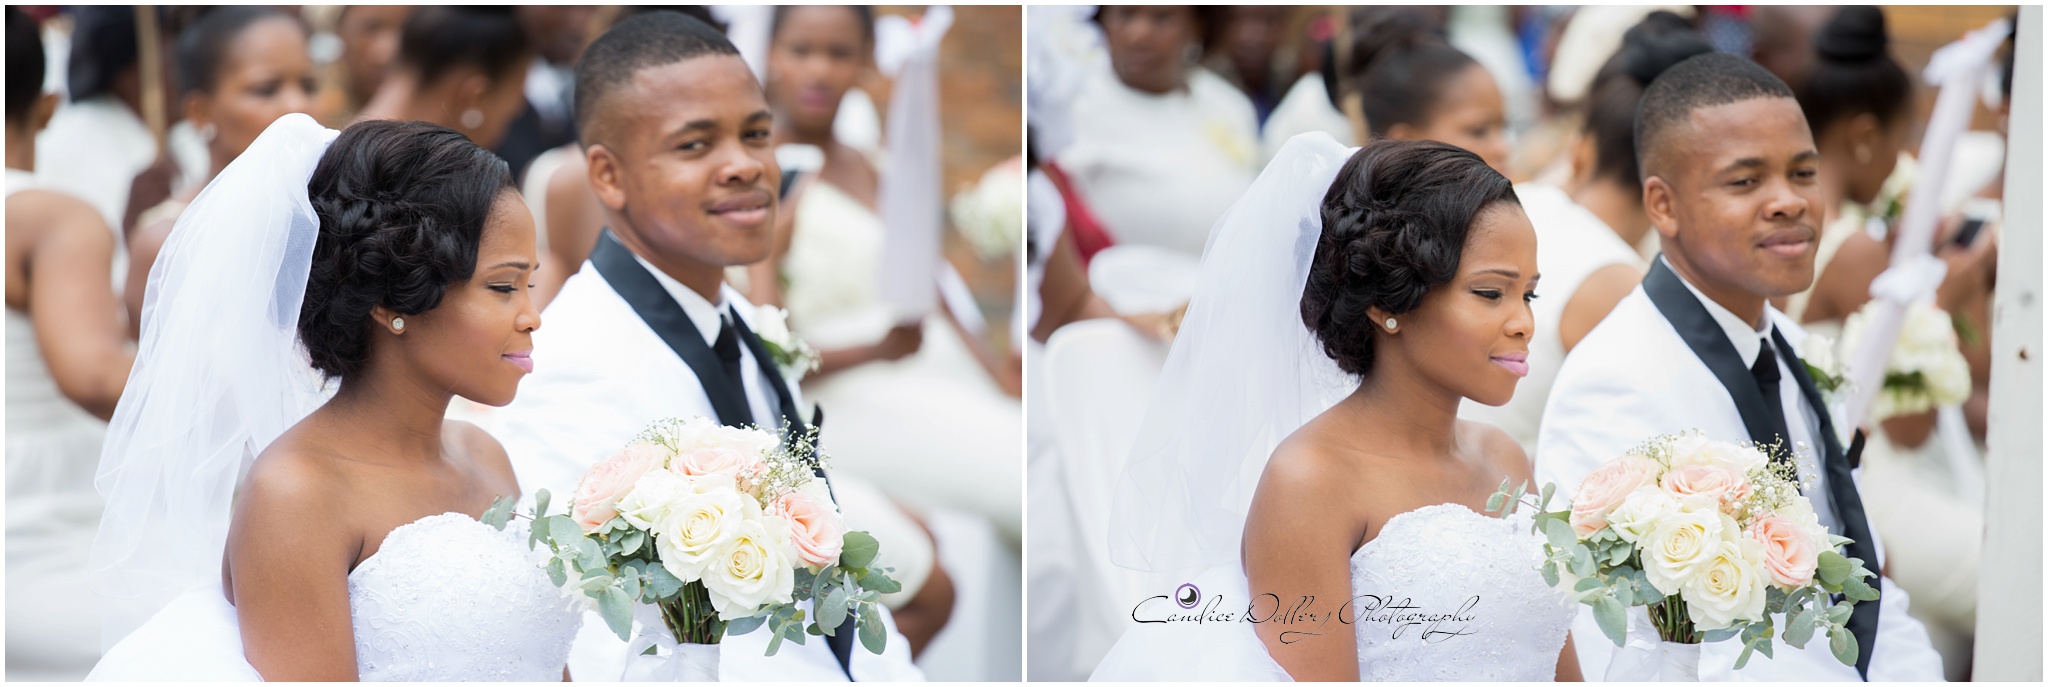 Asanda & Bonga's Wedding - Candice Dollery Photography_8203